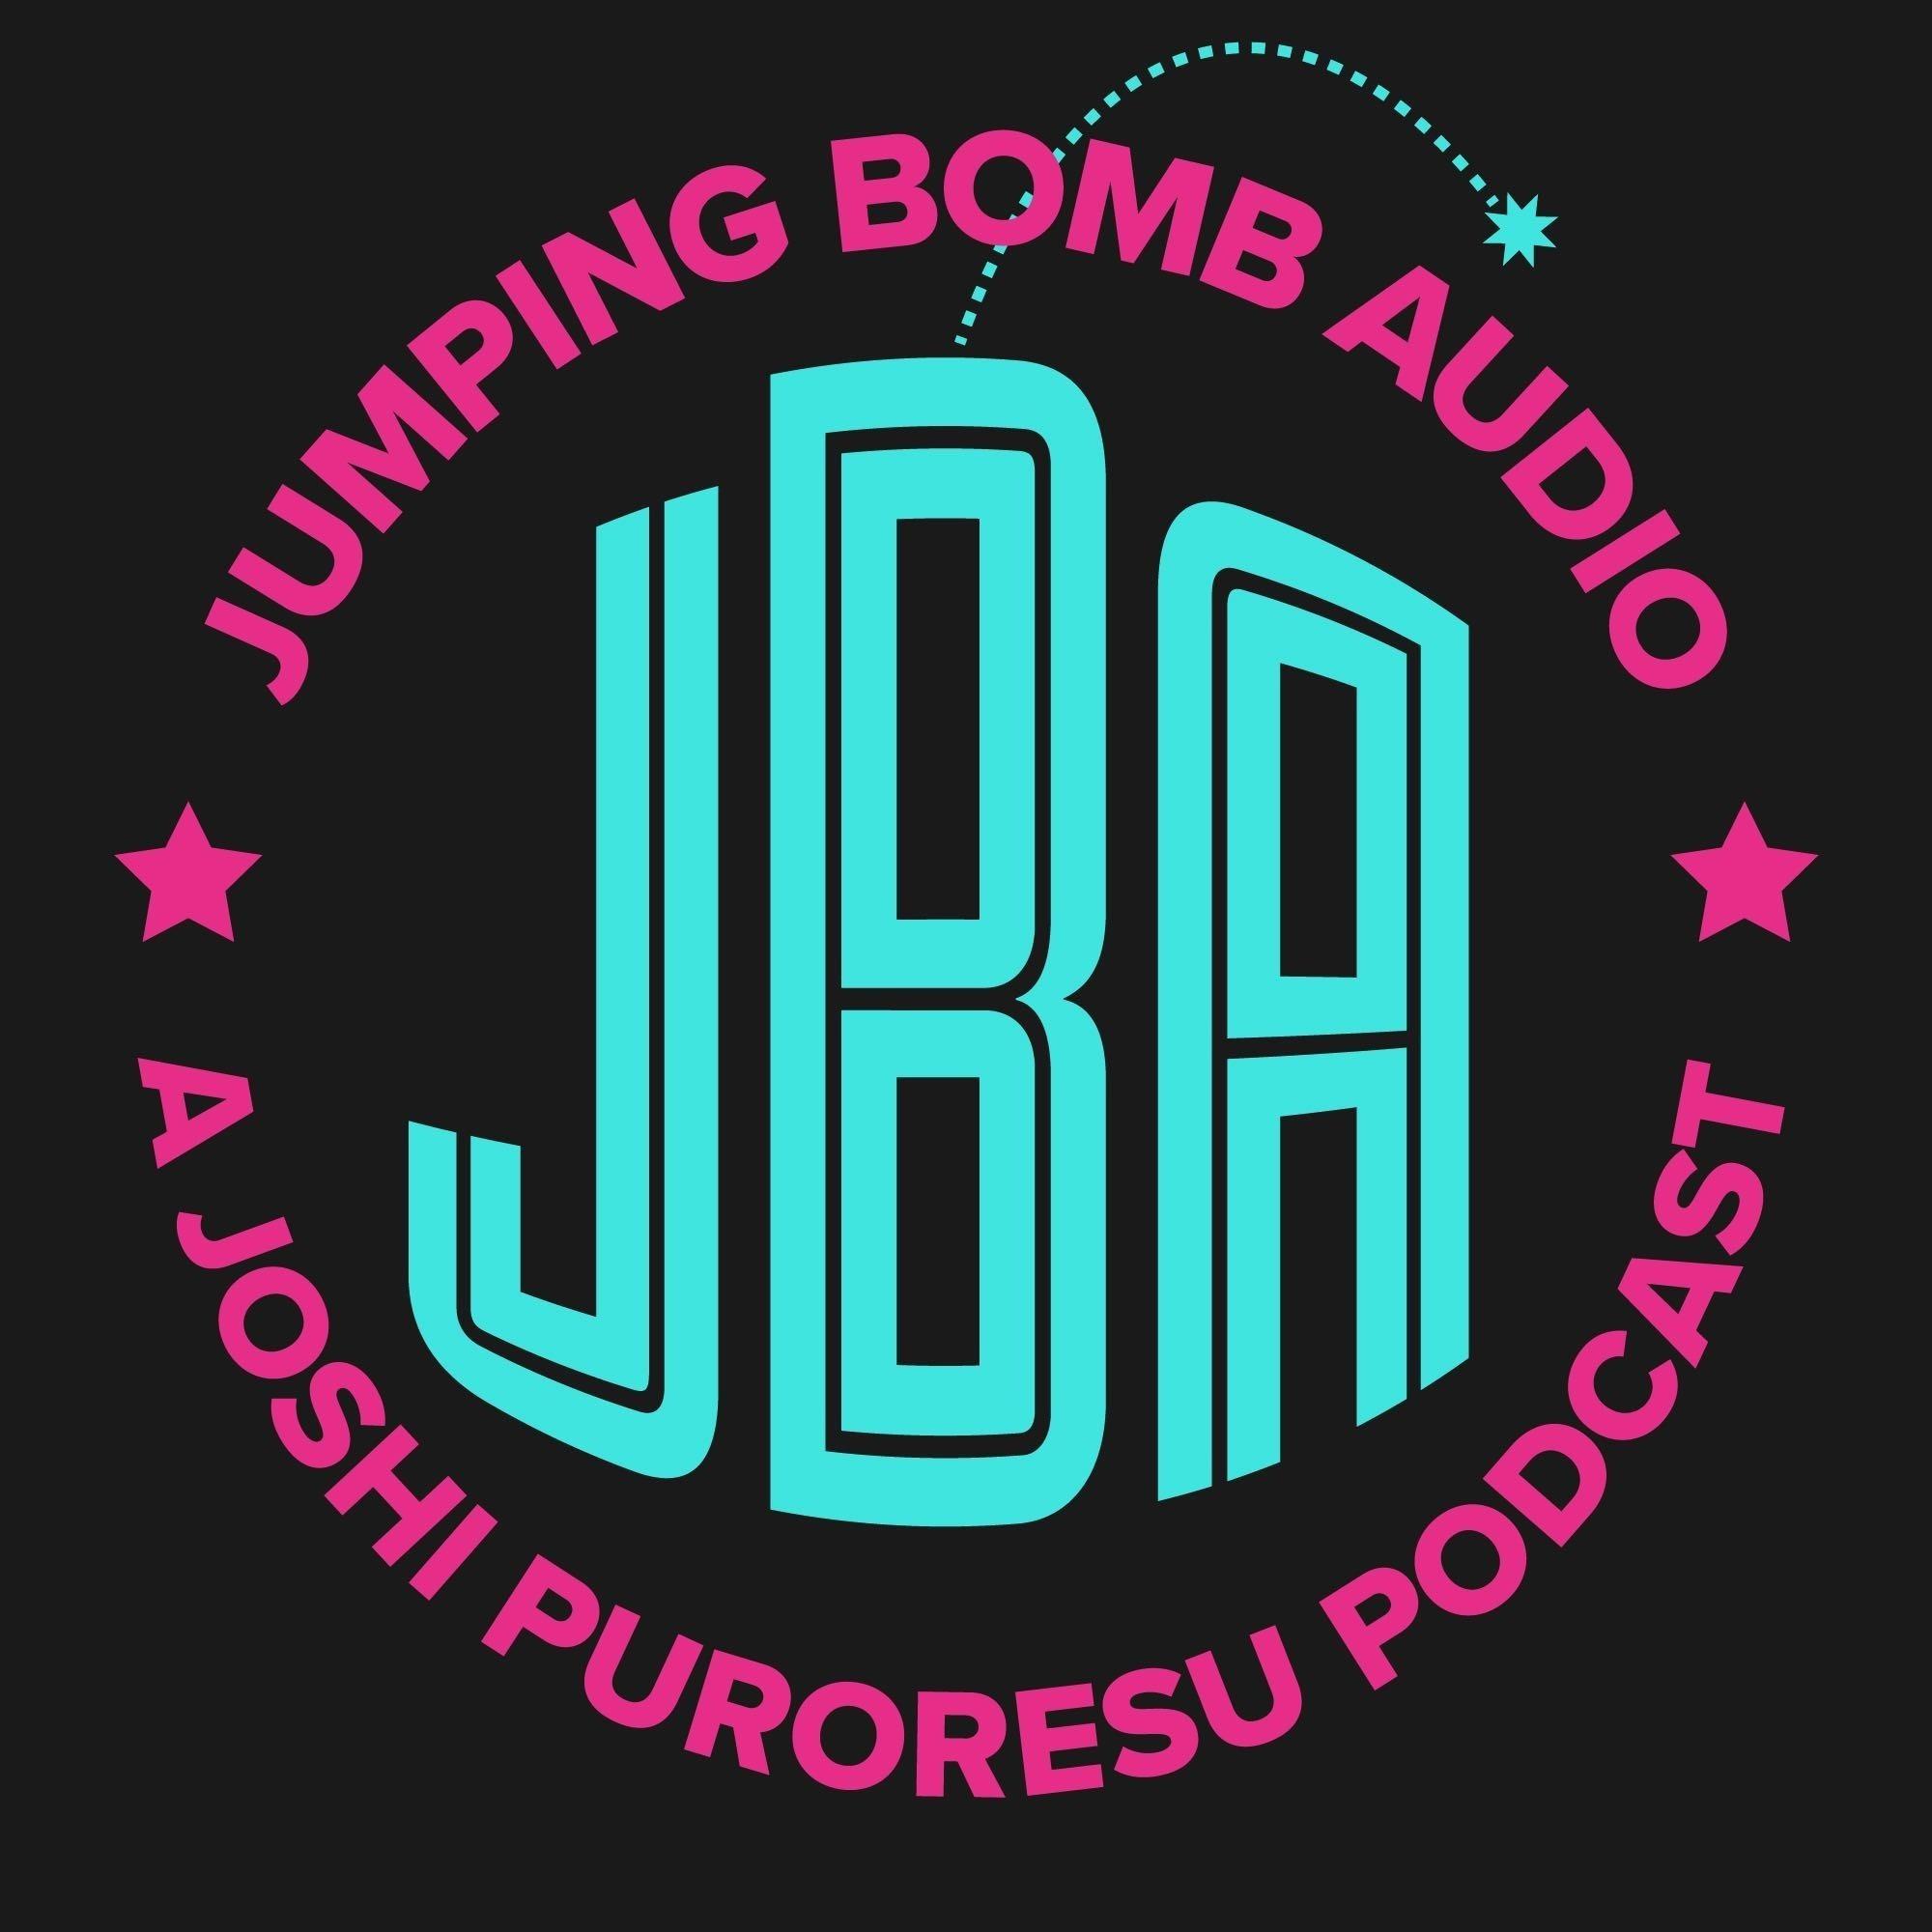 Jumping Bomb Audio